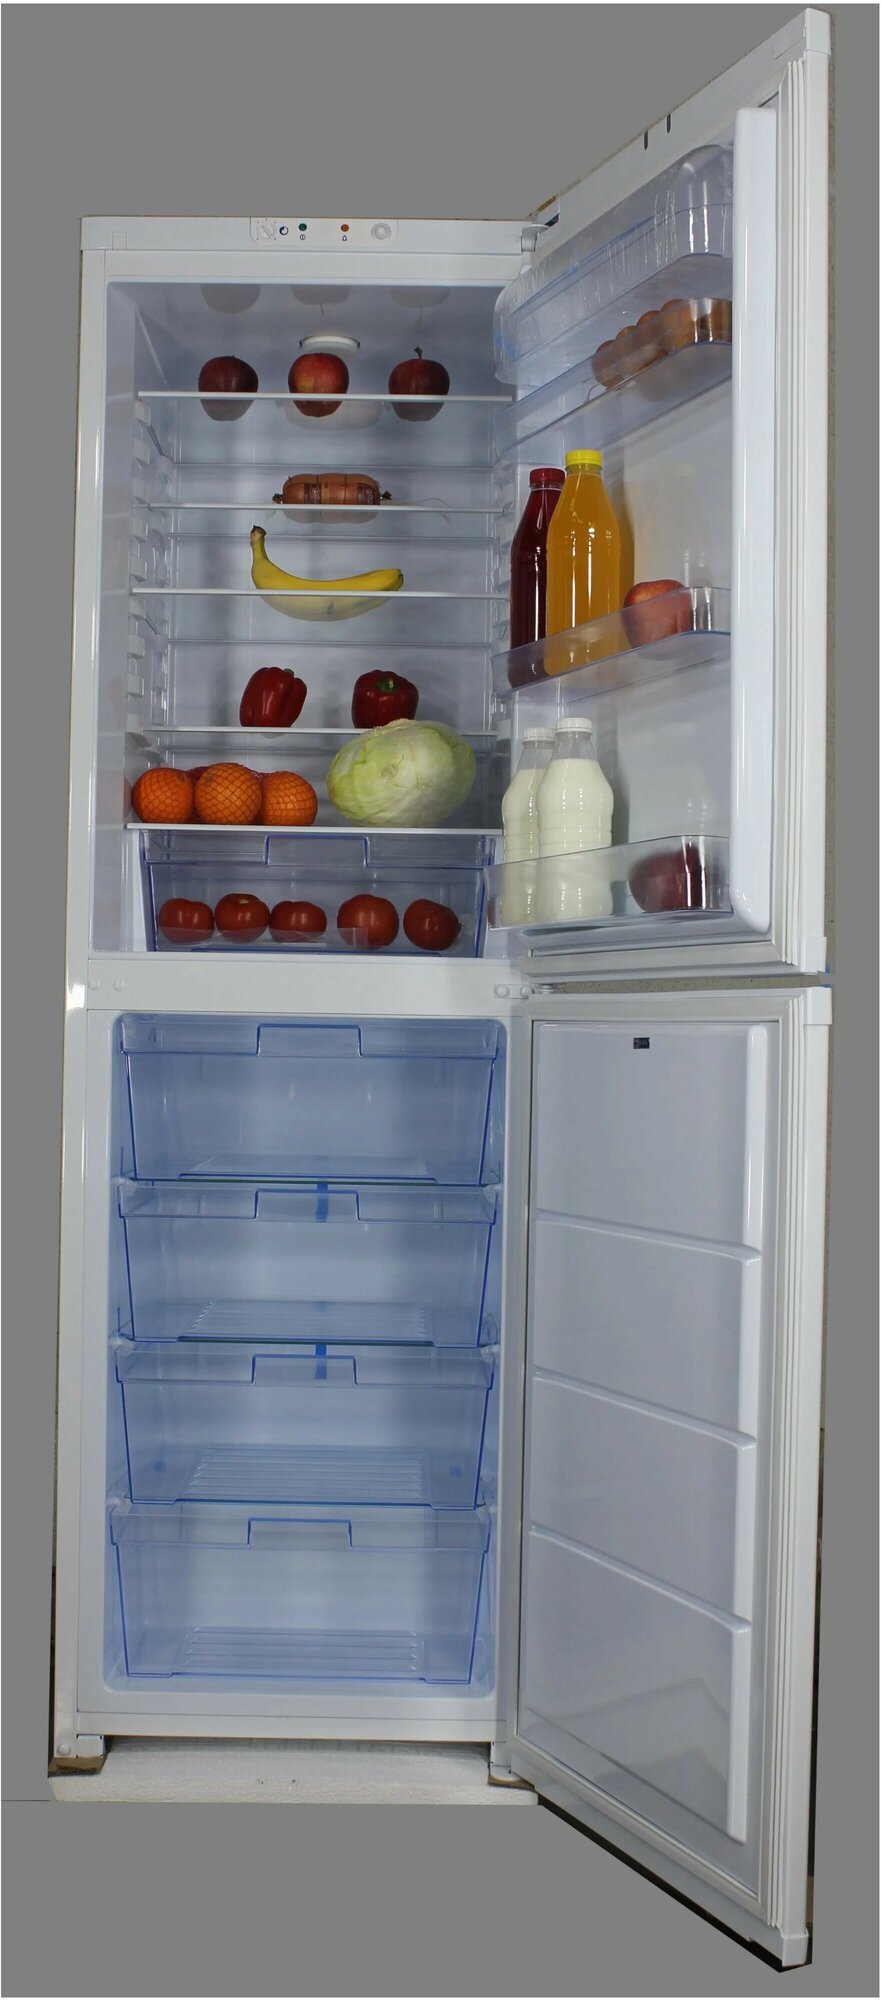 Холодильник орск 176B белый